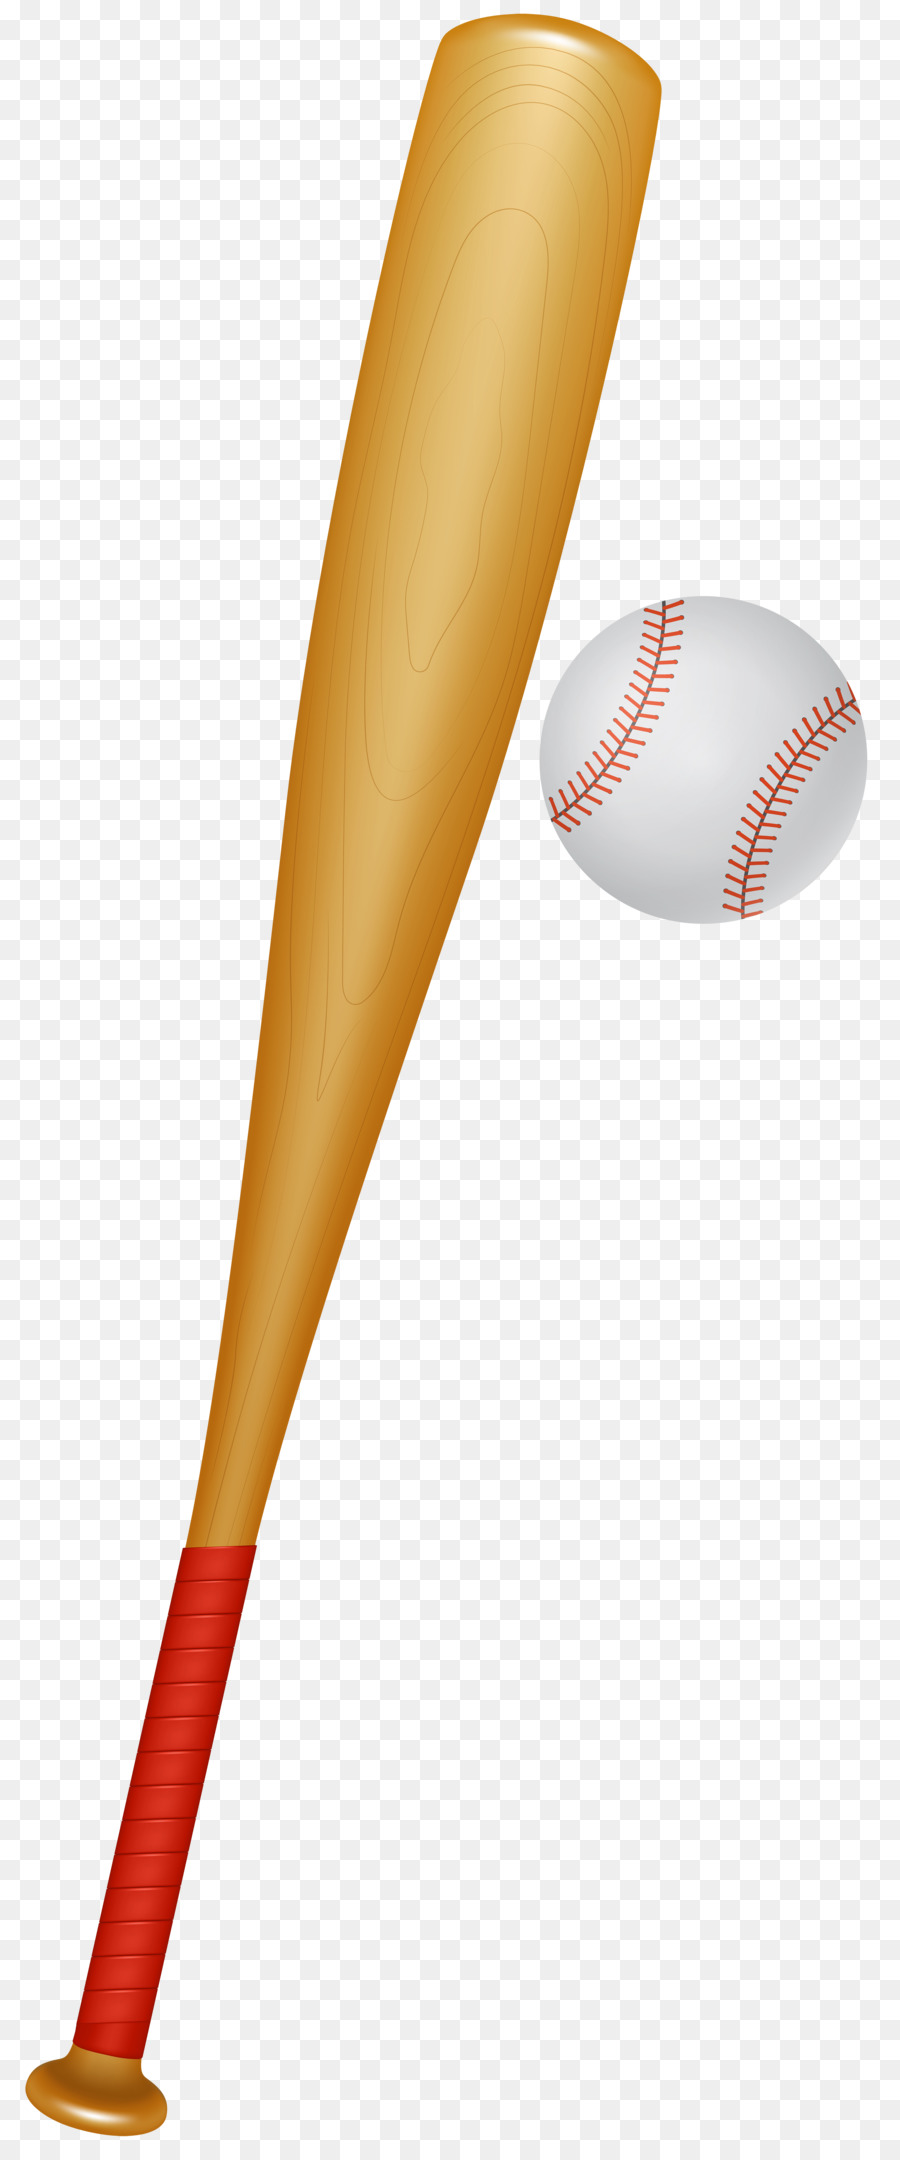 Baseball Bats Clip art Portable Network Graphics Ball game - baseball png download - 3360*8000 - Free Transparent Baseball Bats png Download.